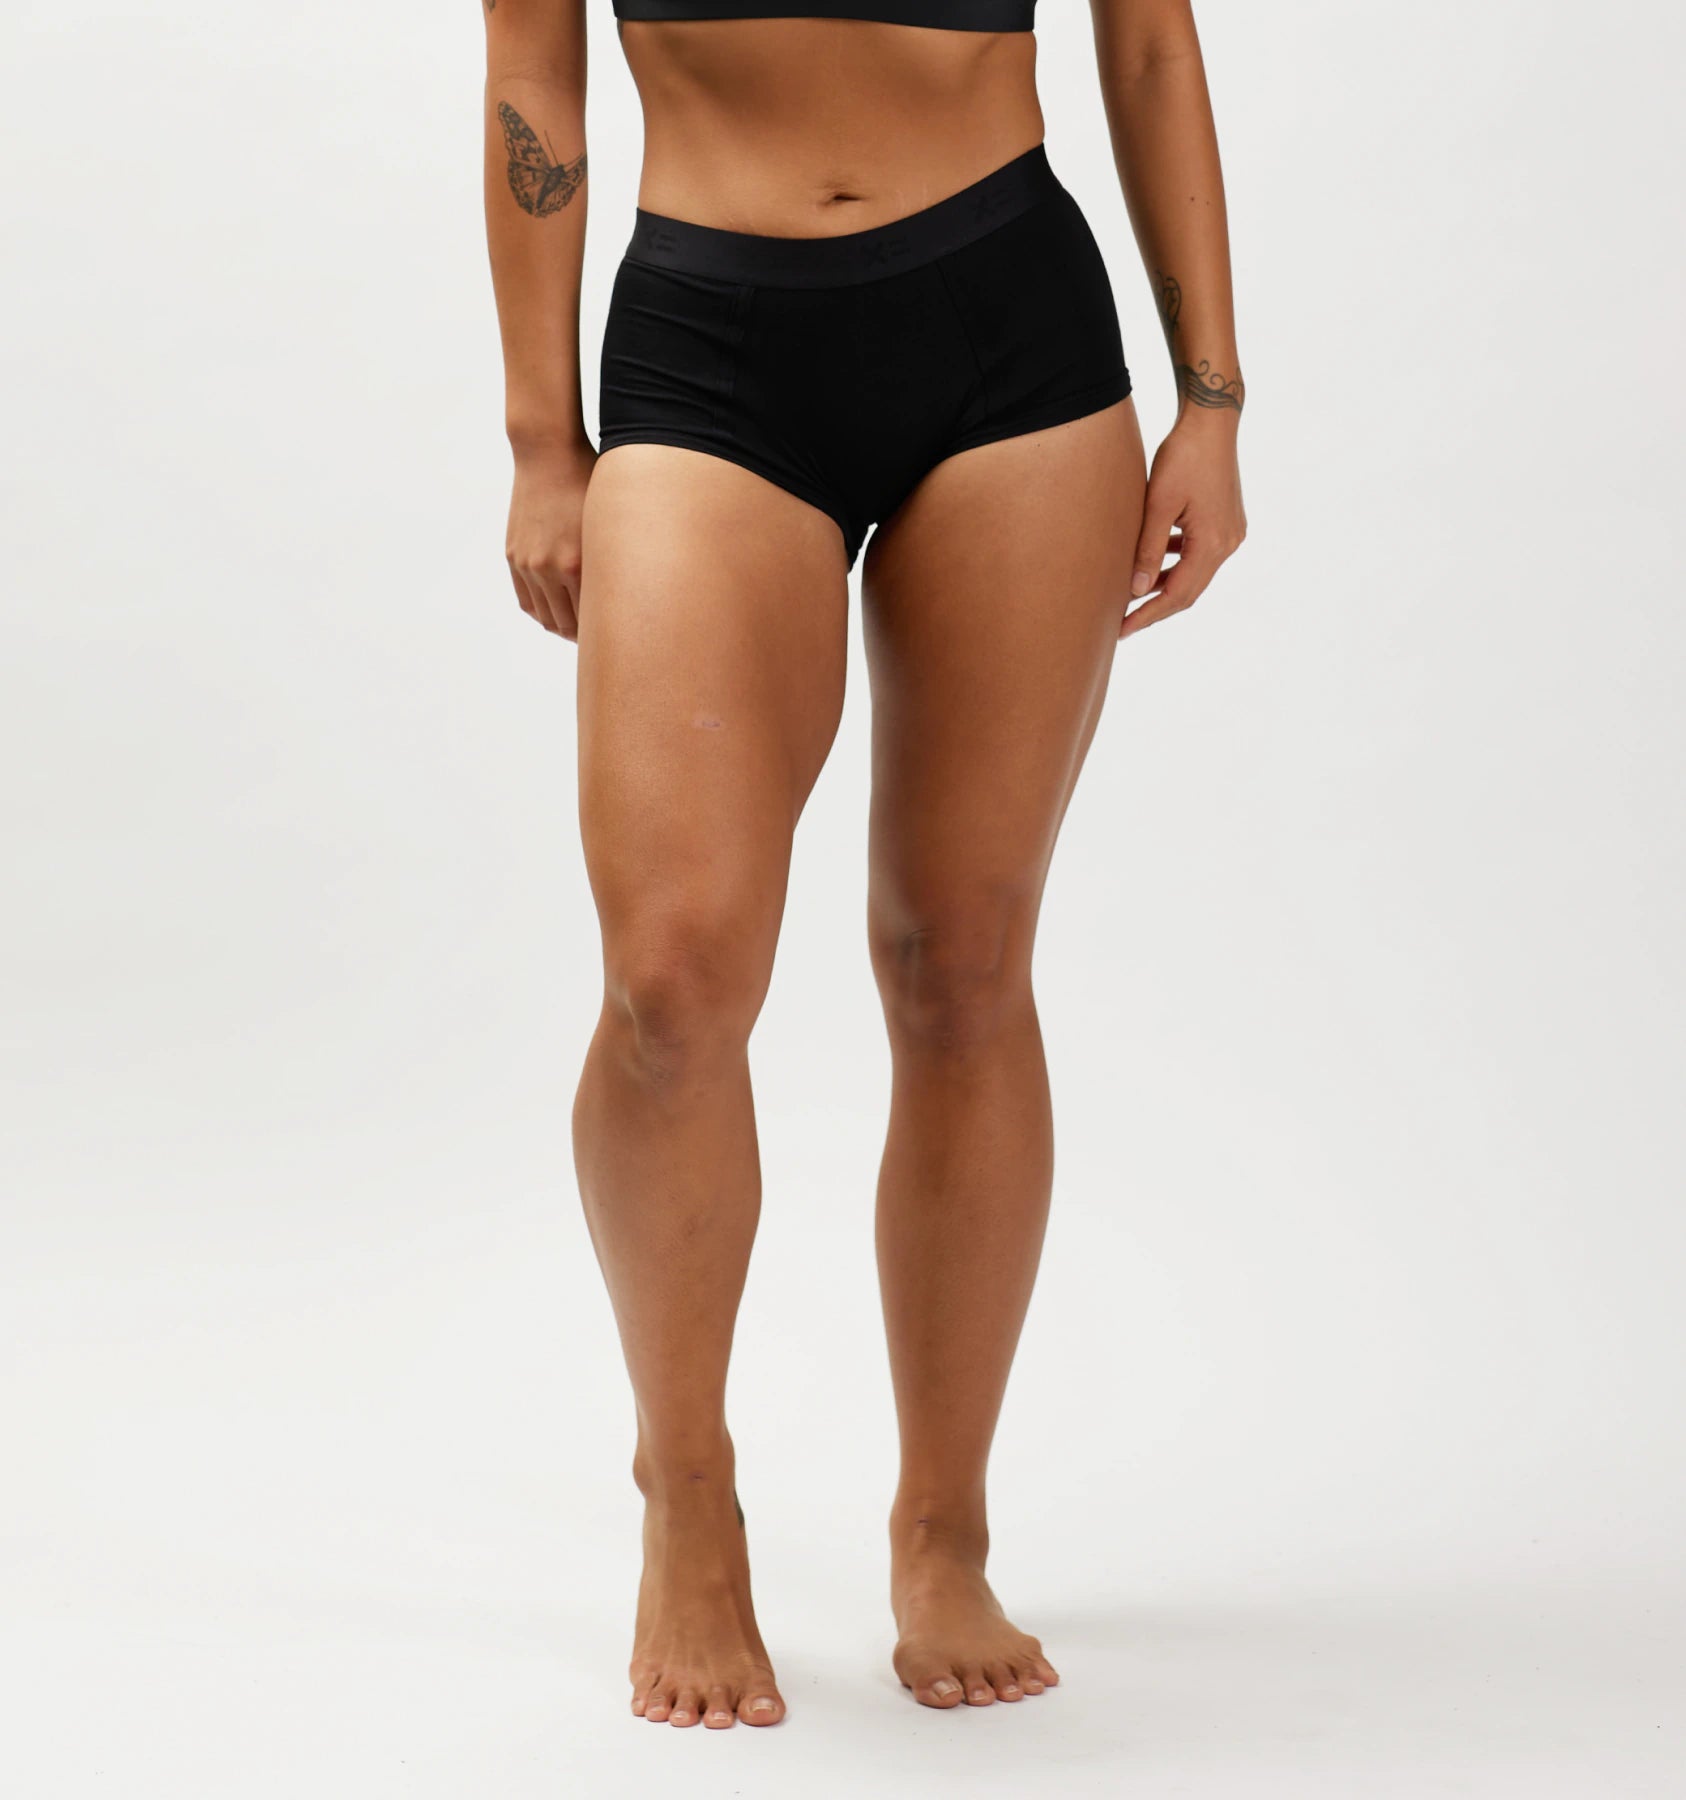 Tomboyx Boxer Briefs Underwear, 4.5 Inseam, Cotton Stretch Comfortable Boy  Shorts Black Logo Large : Target